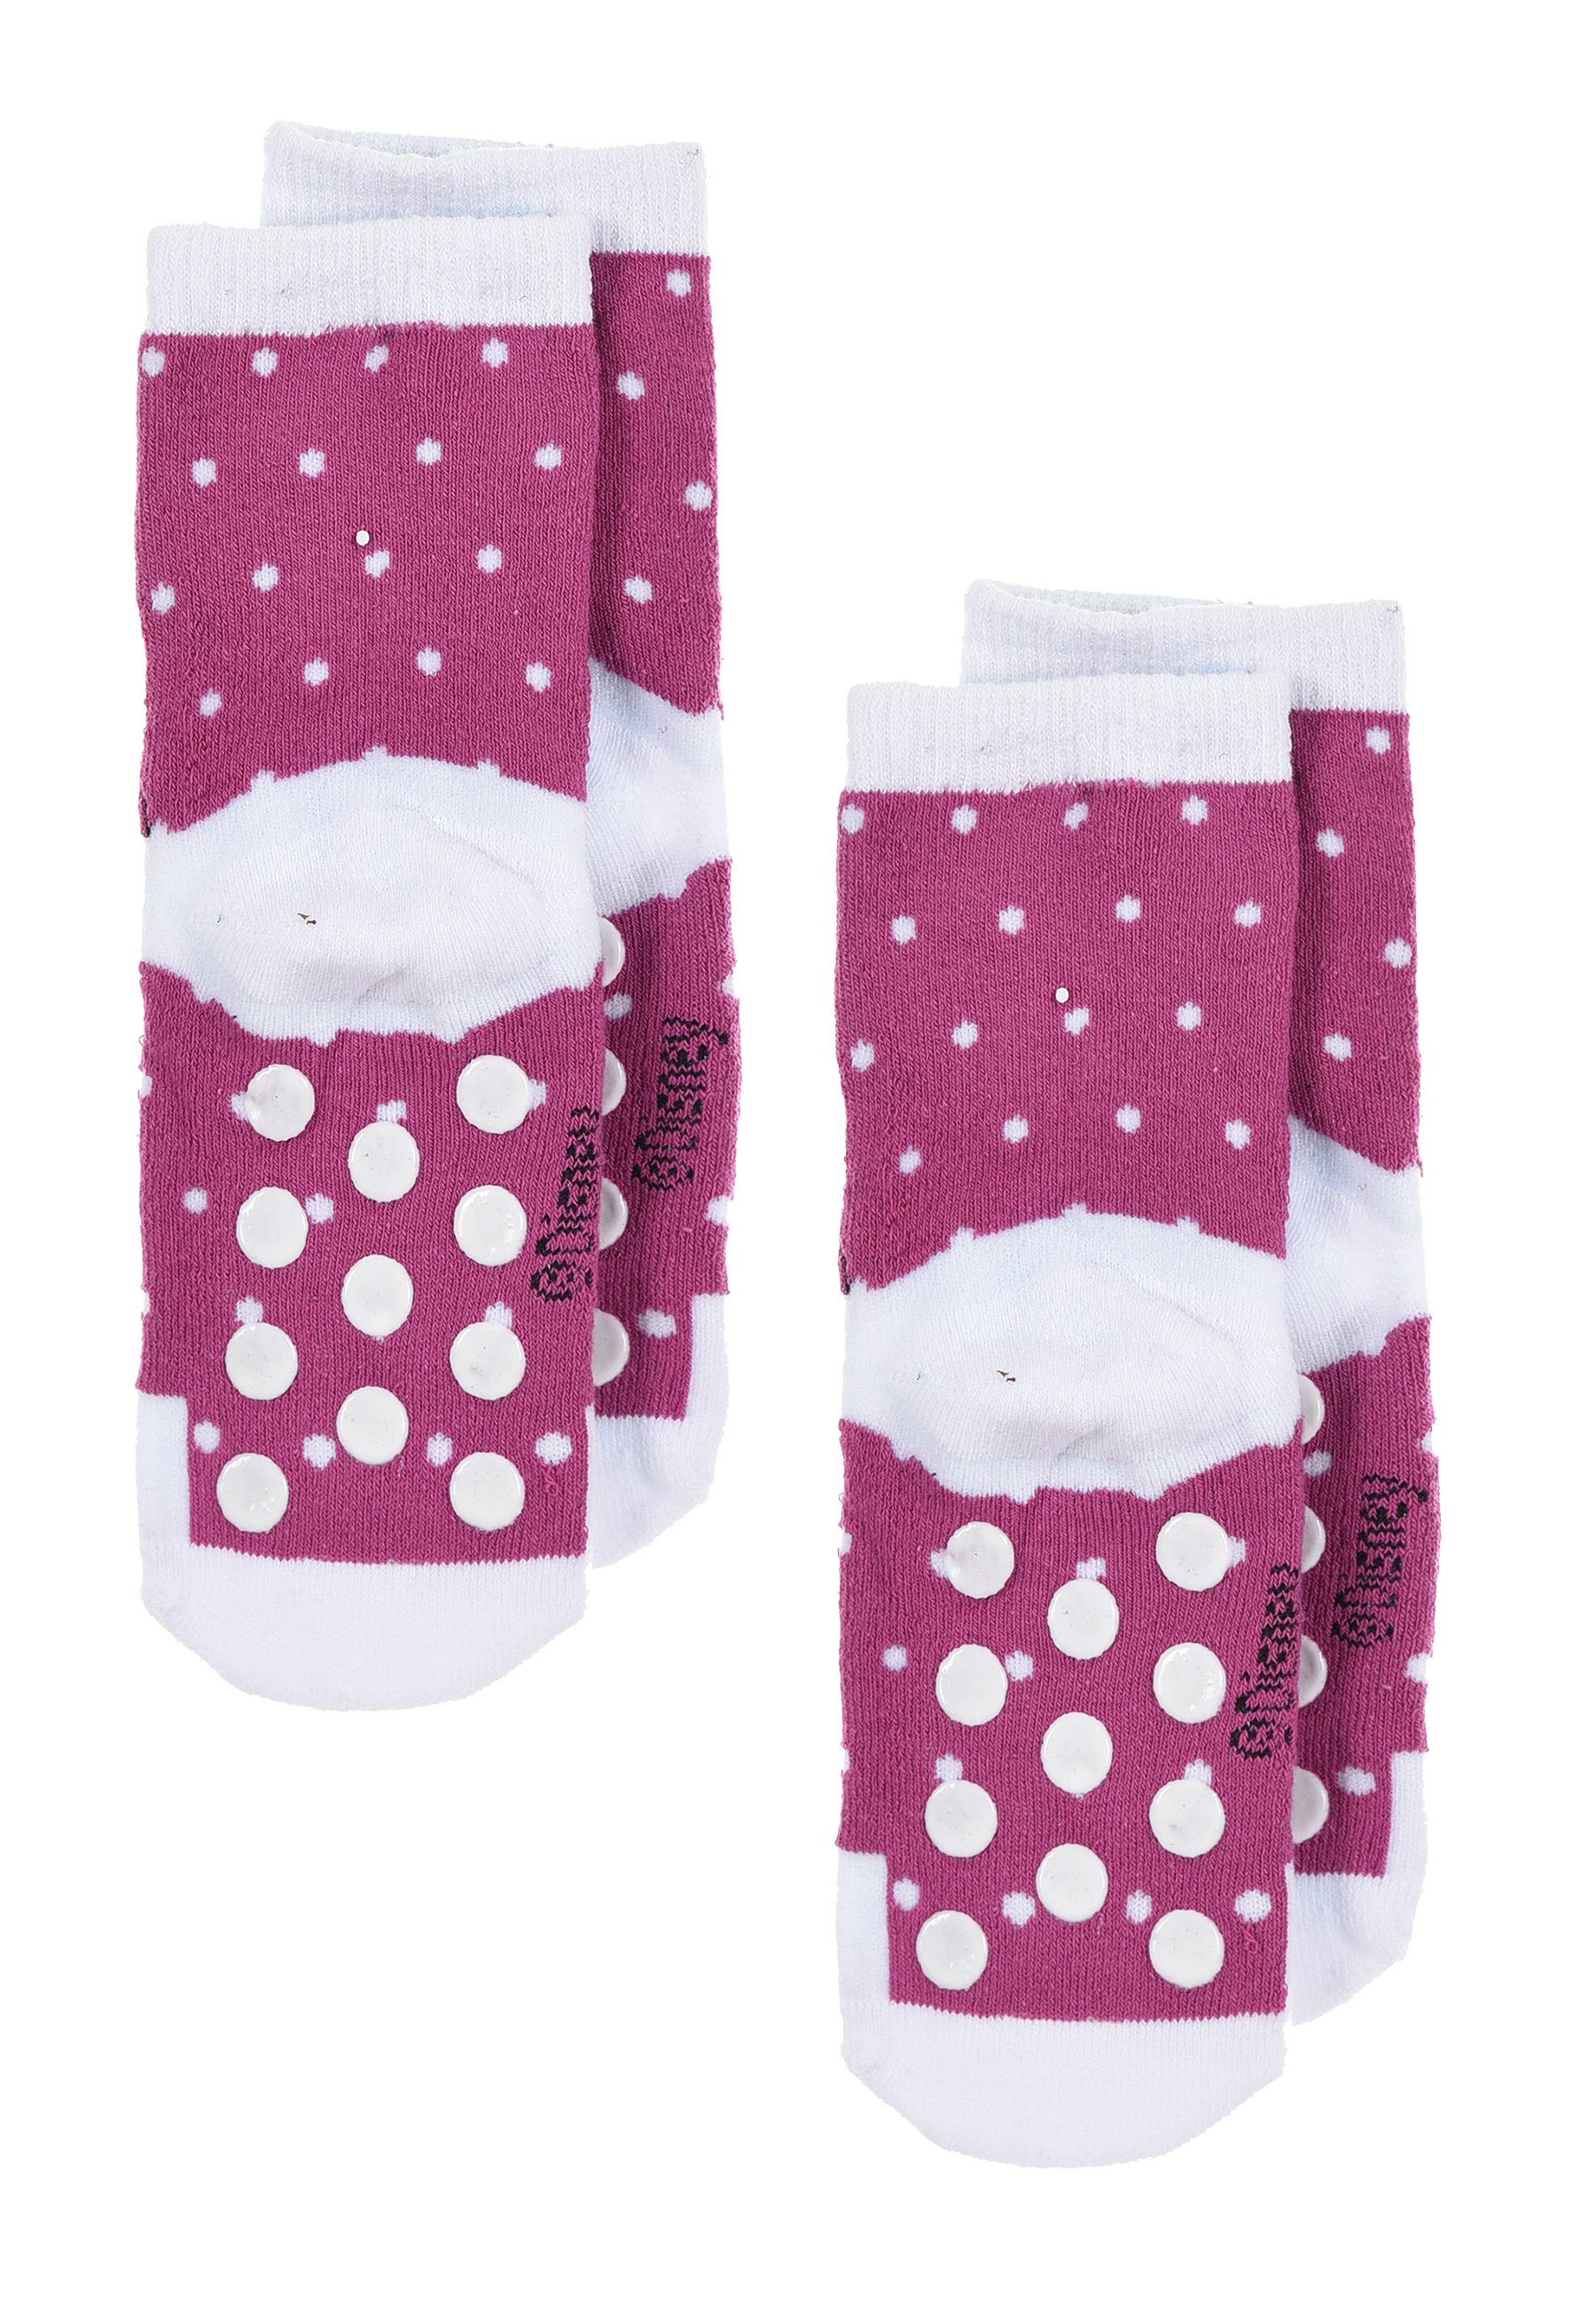 Stopper-Socken Noppen mit Socken anti-rutsch (2-Paar) Disney 2 Strümpfe Frozen Kinder Mädchen Paar Gumminoppen Eiskönigin ABS-Socken